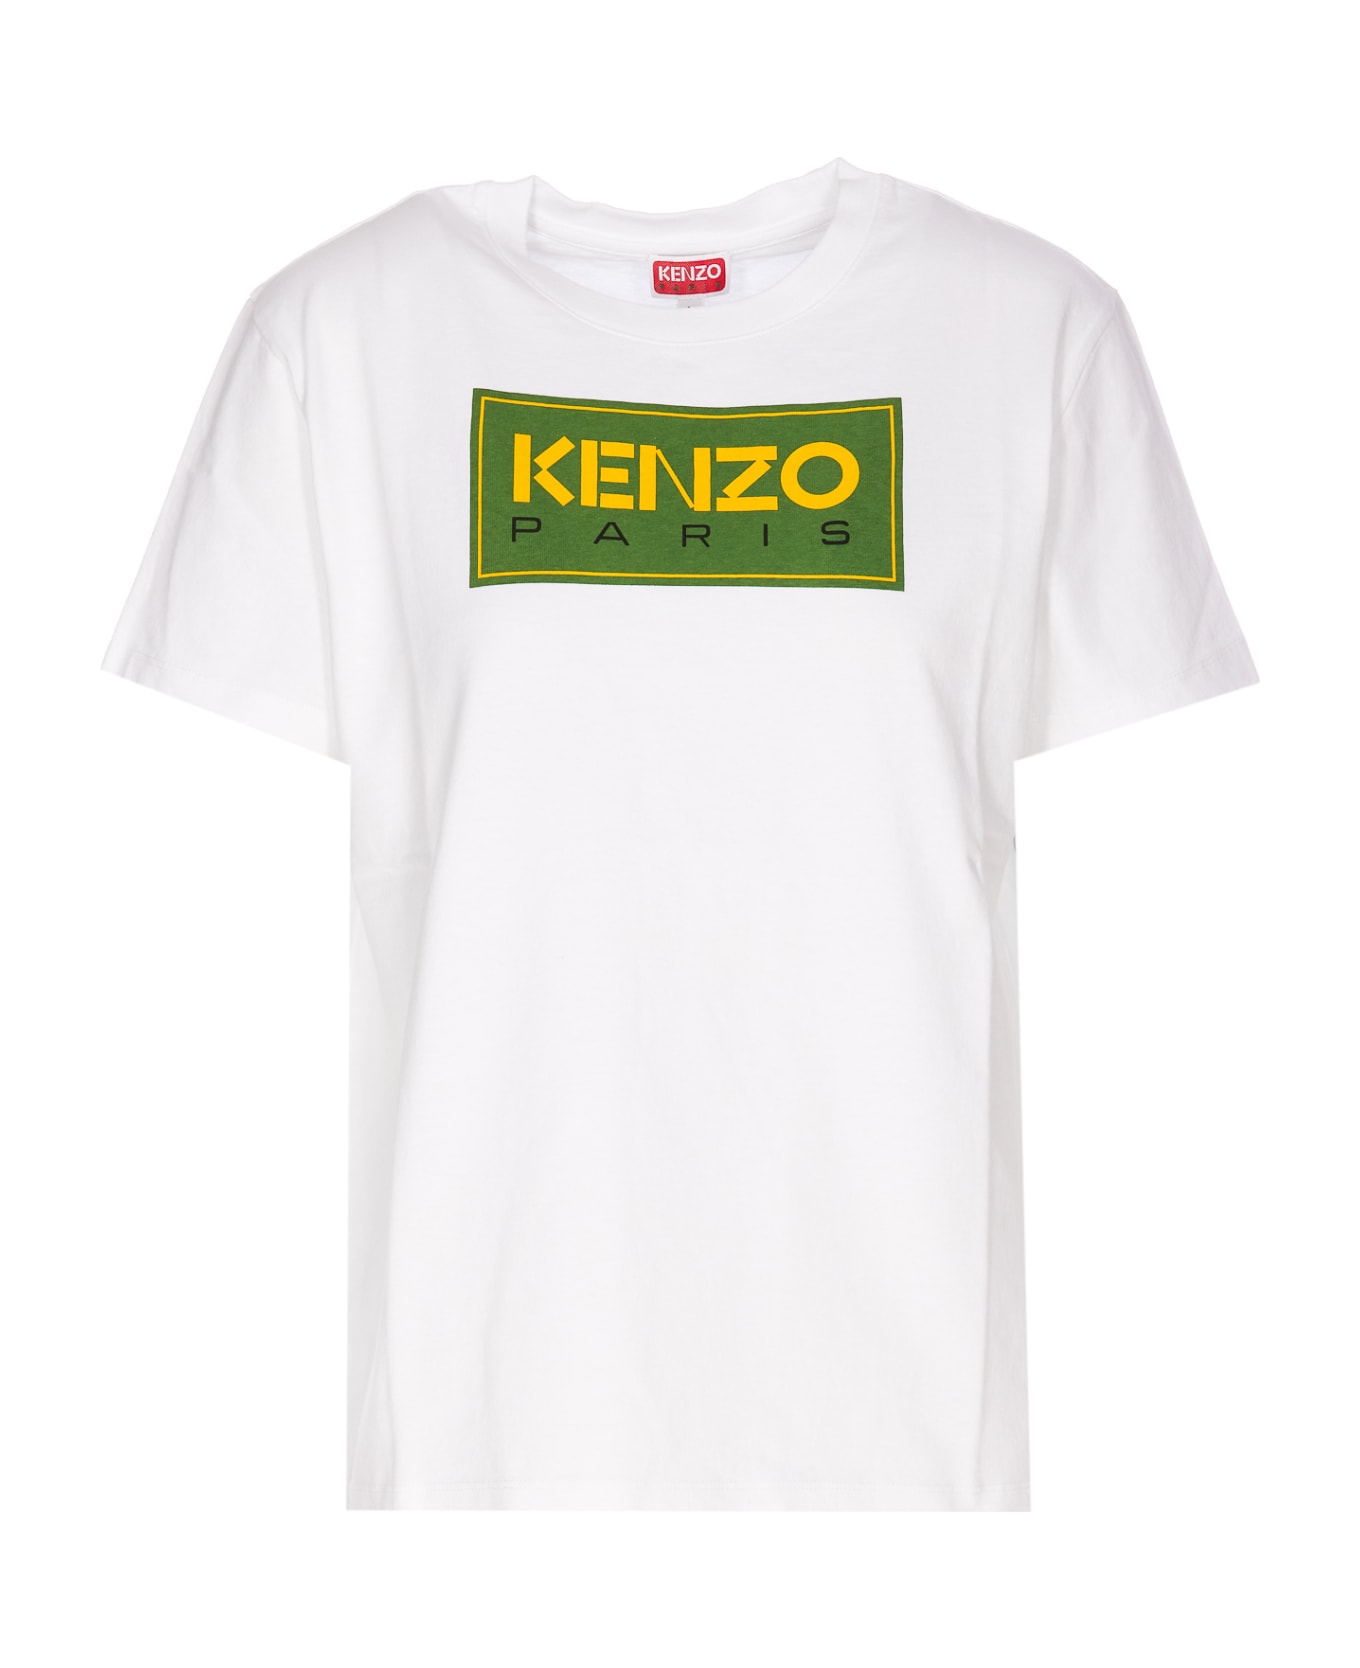 Kenzo Paris Loose T-shirt - White Tシャツ